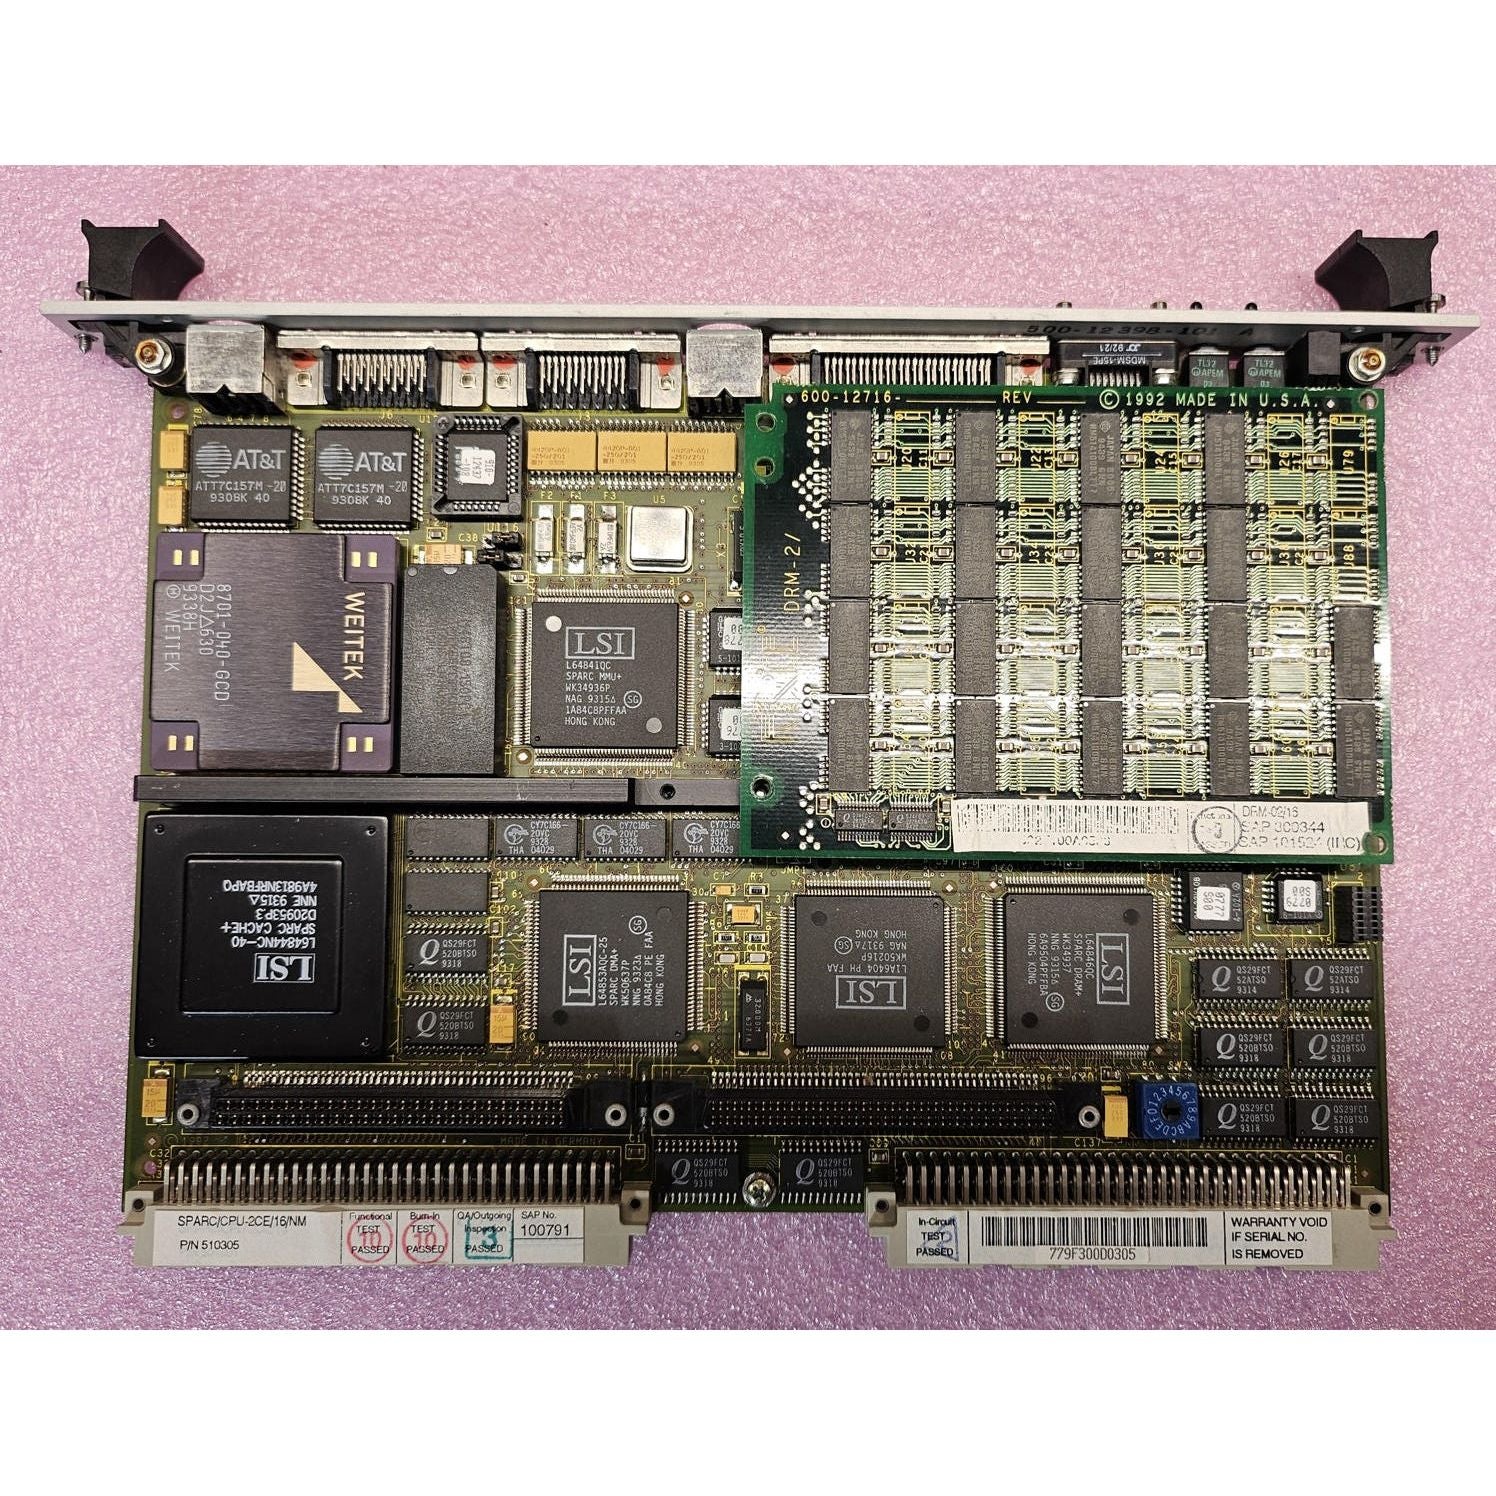 CPU-2CE /16   |  Force Computer